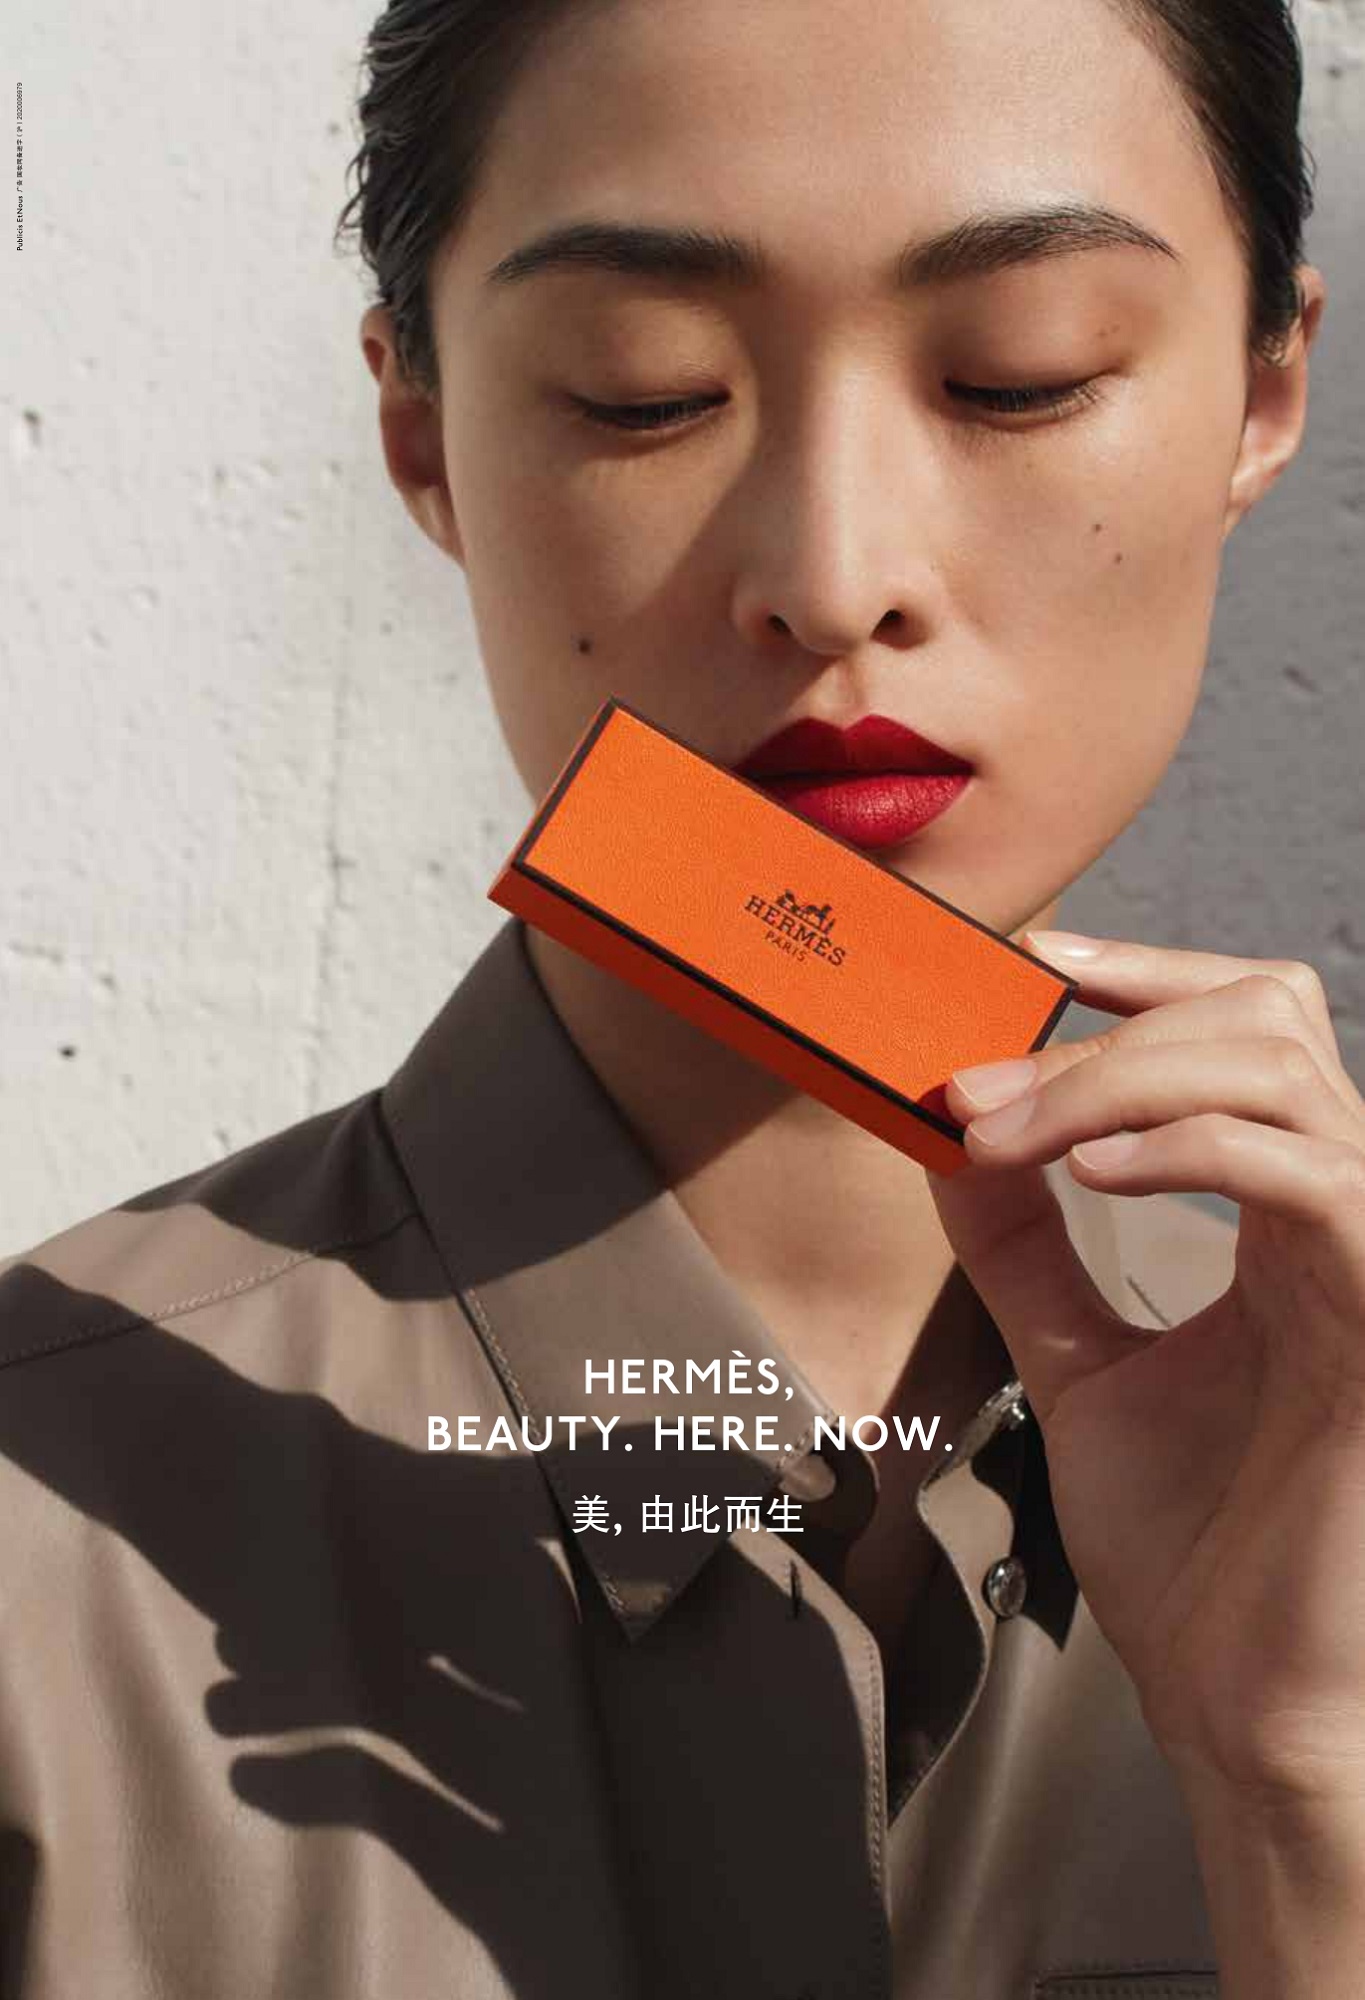 Hermès: Beauty. Here. Now., 2 - adsofbrands.net